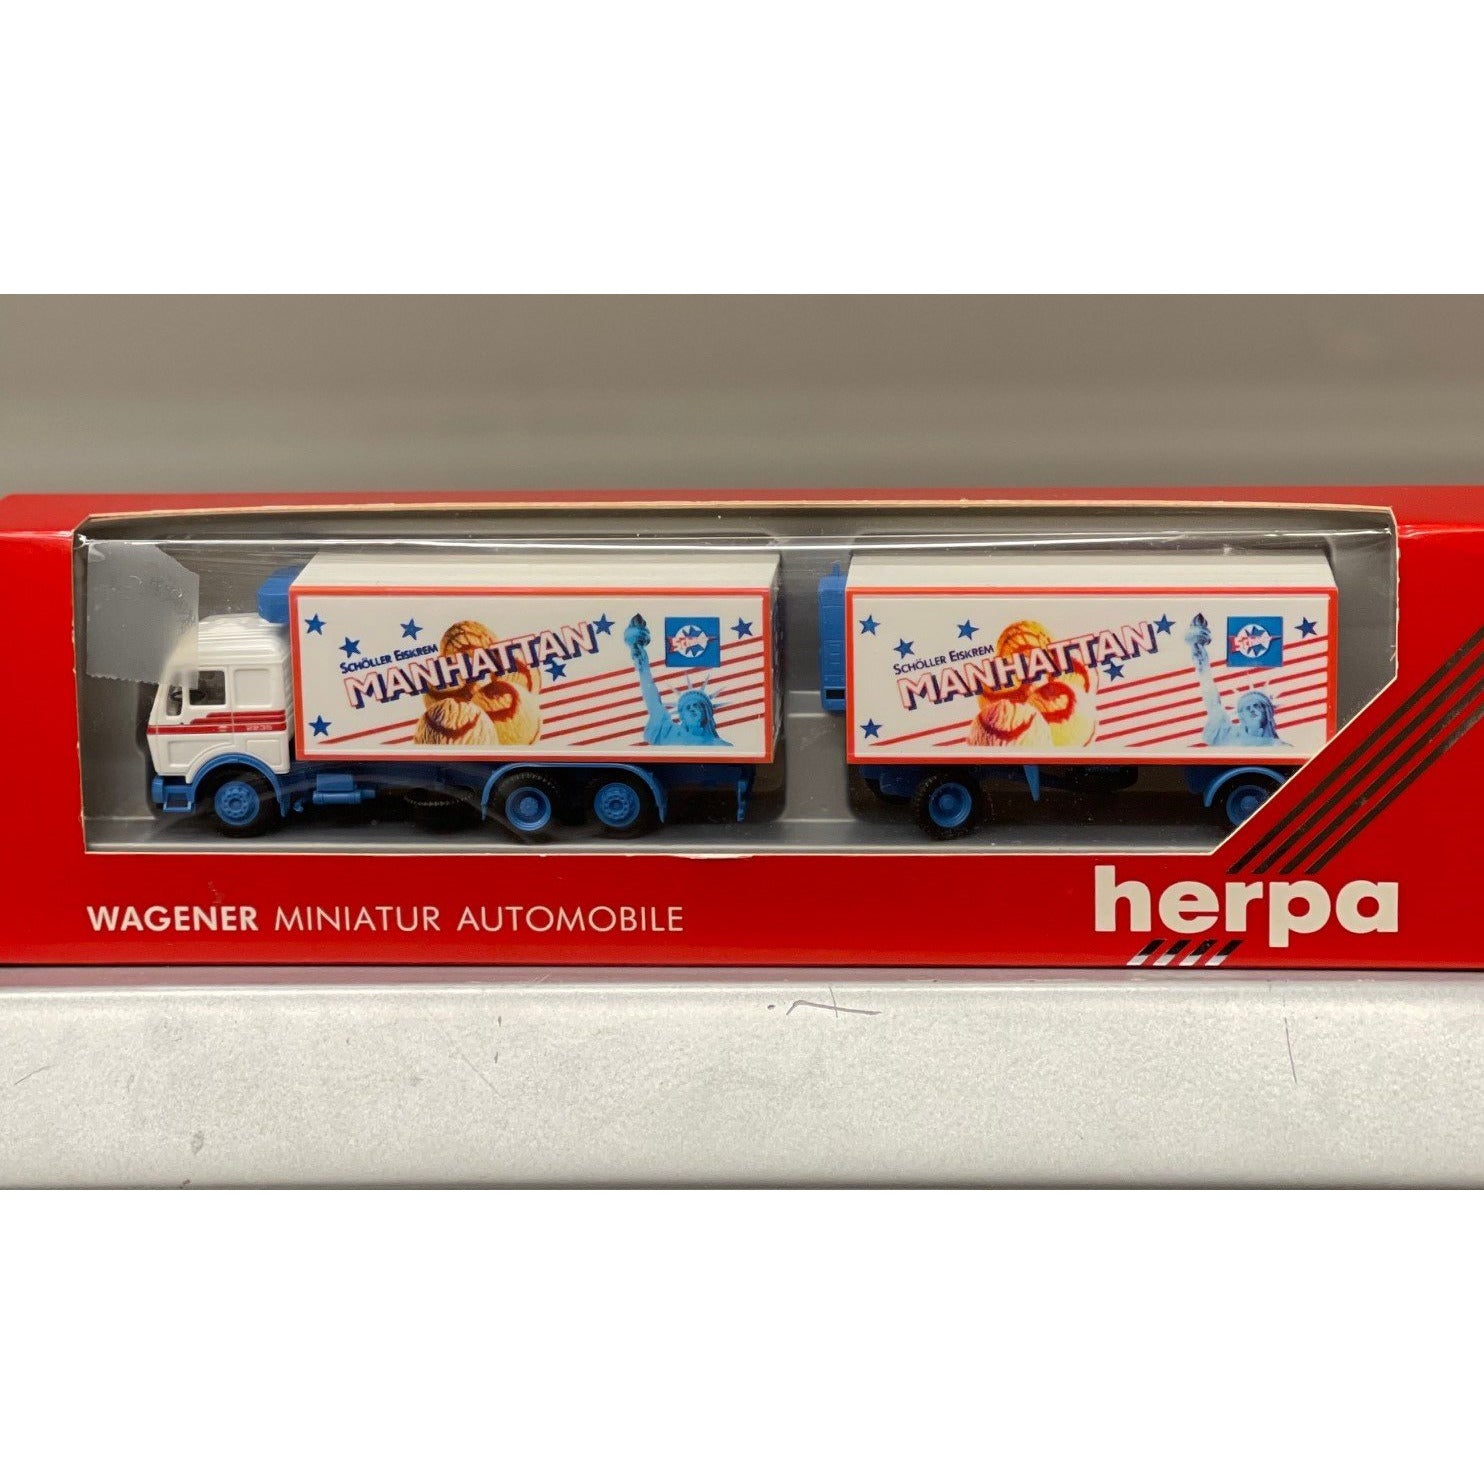 Herpa Wagener Miniature Automobile 1:87 (HO) #811157 Manhattan Ice Cream Tandem Semi